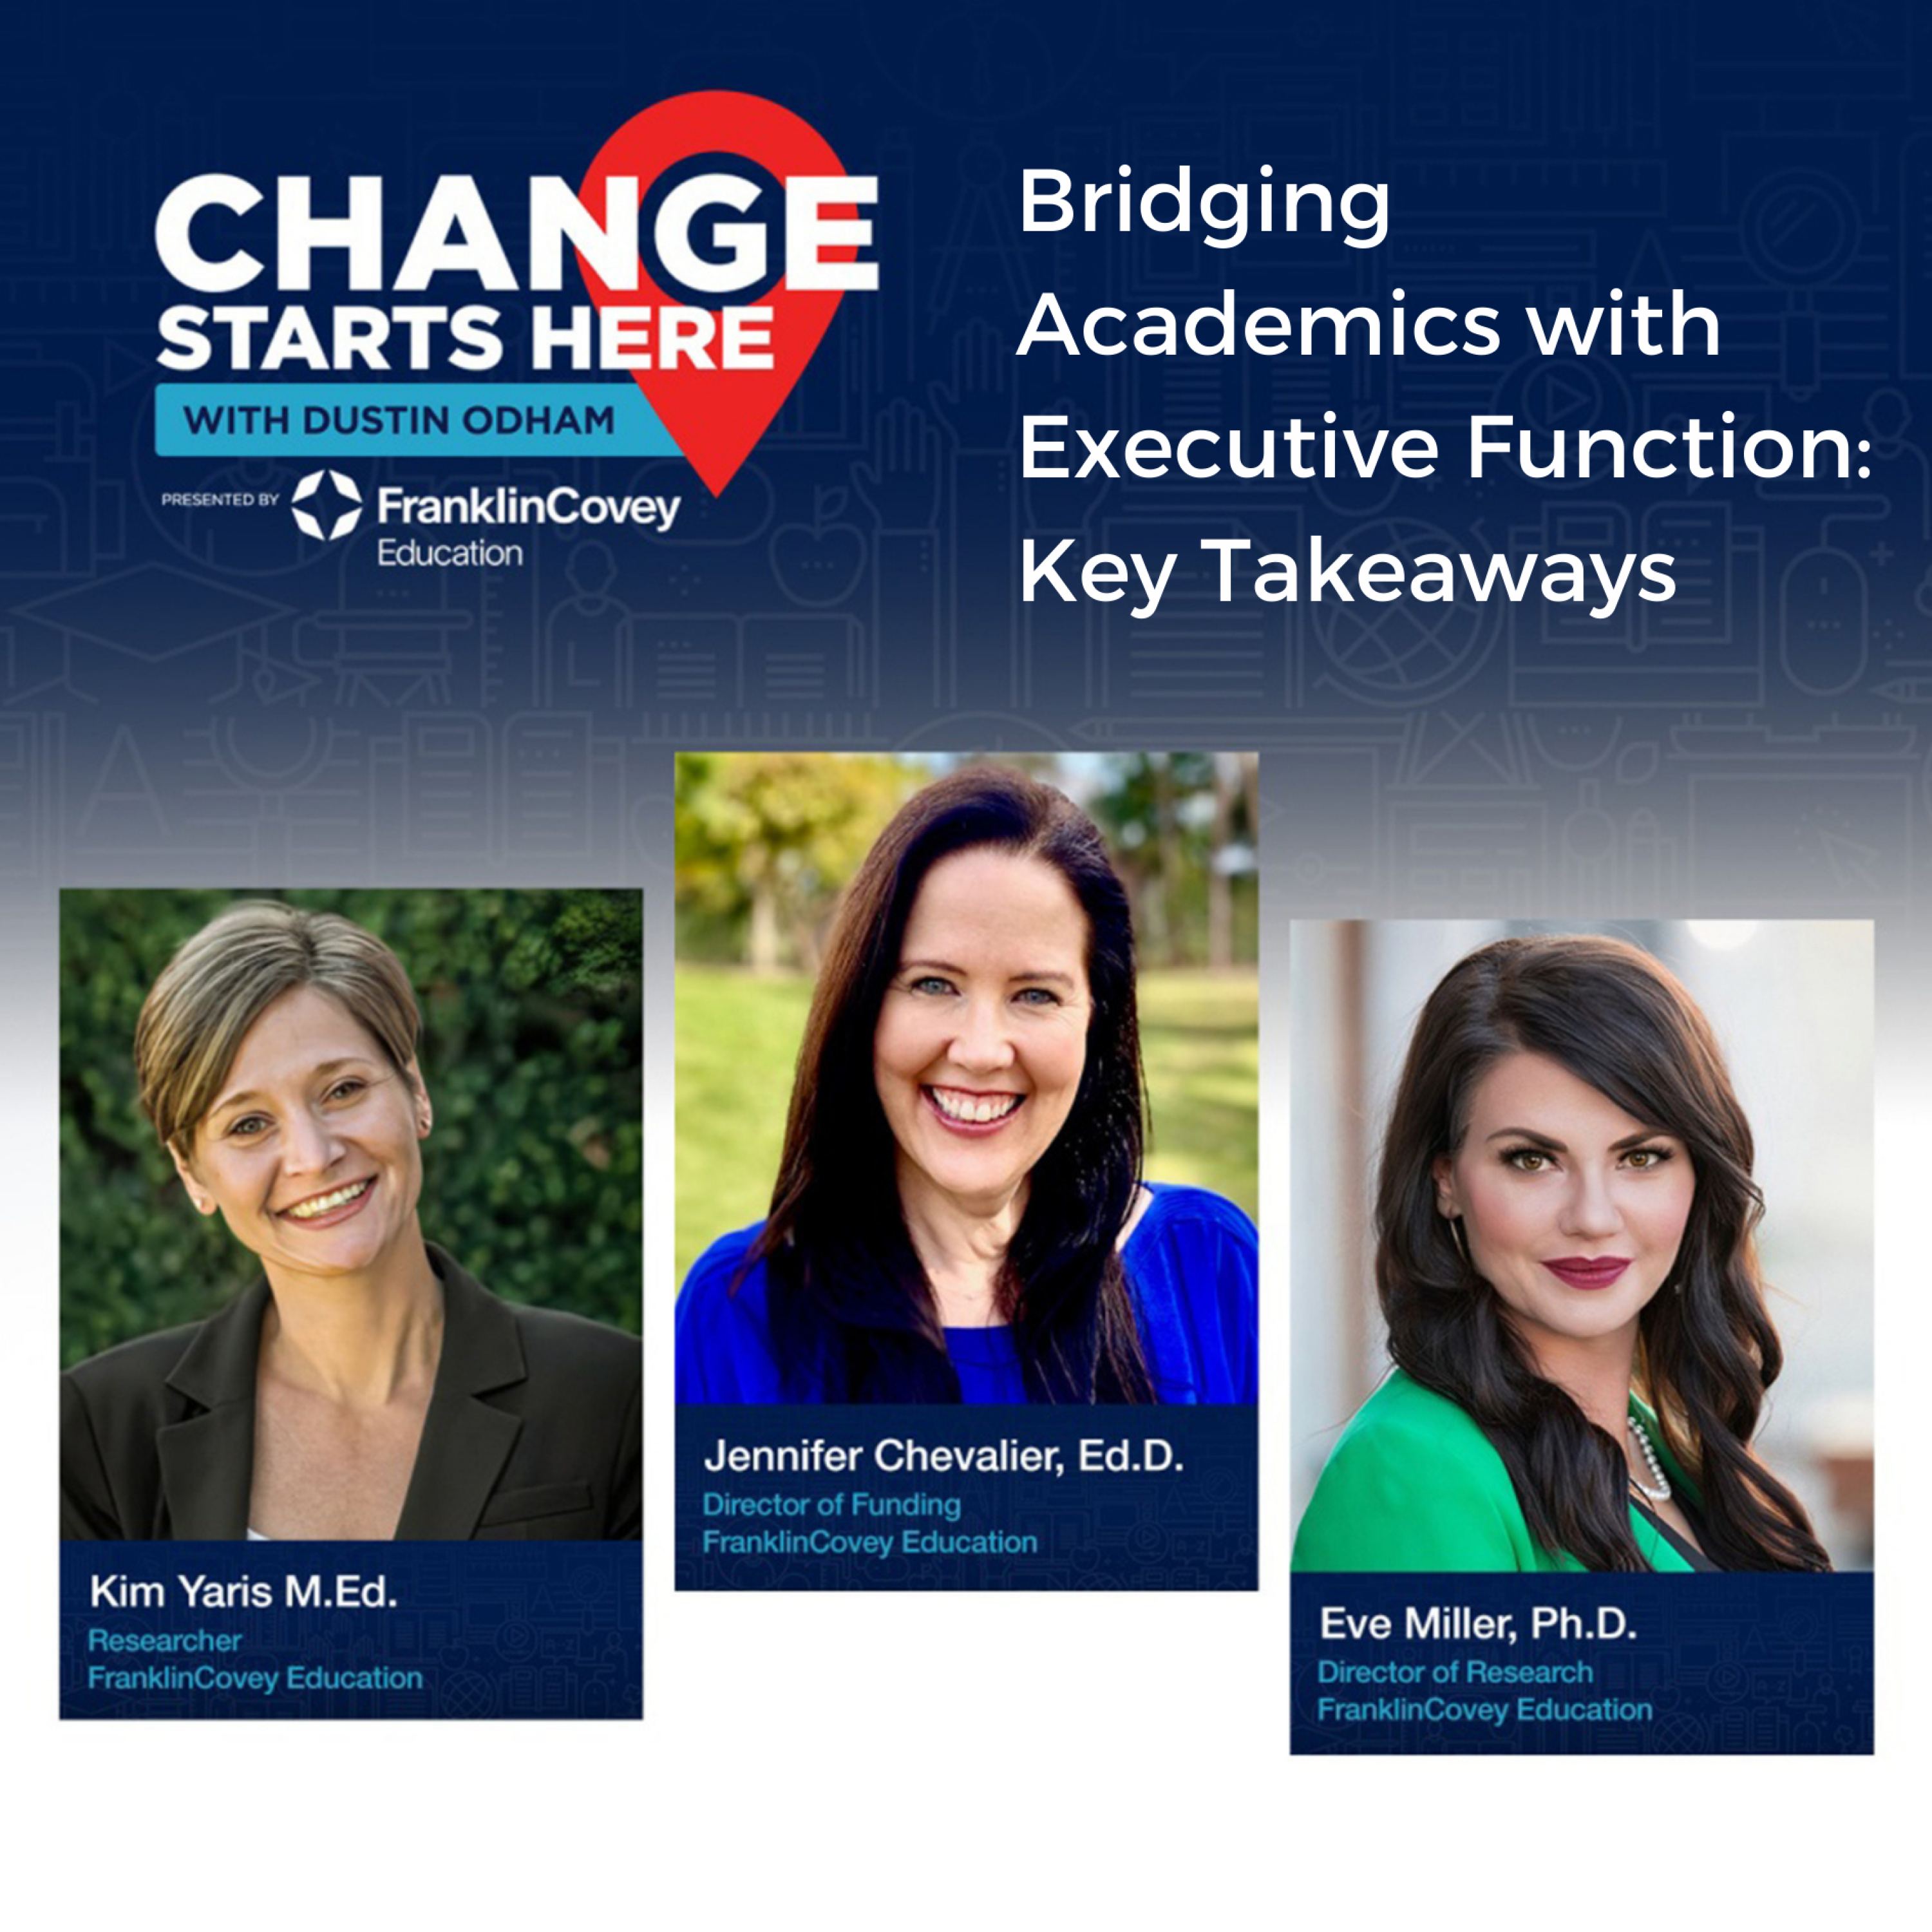 Bridging Academics with Executive Function: Key Takeaways